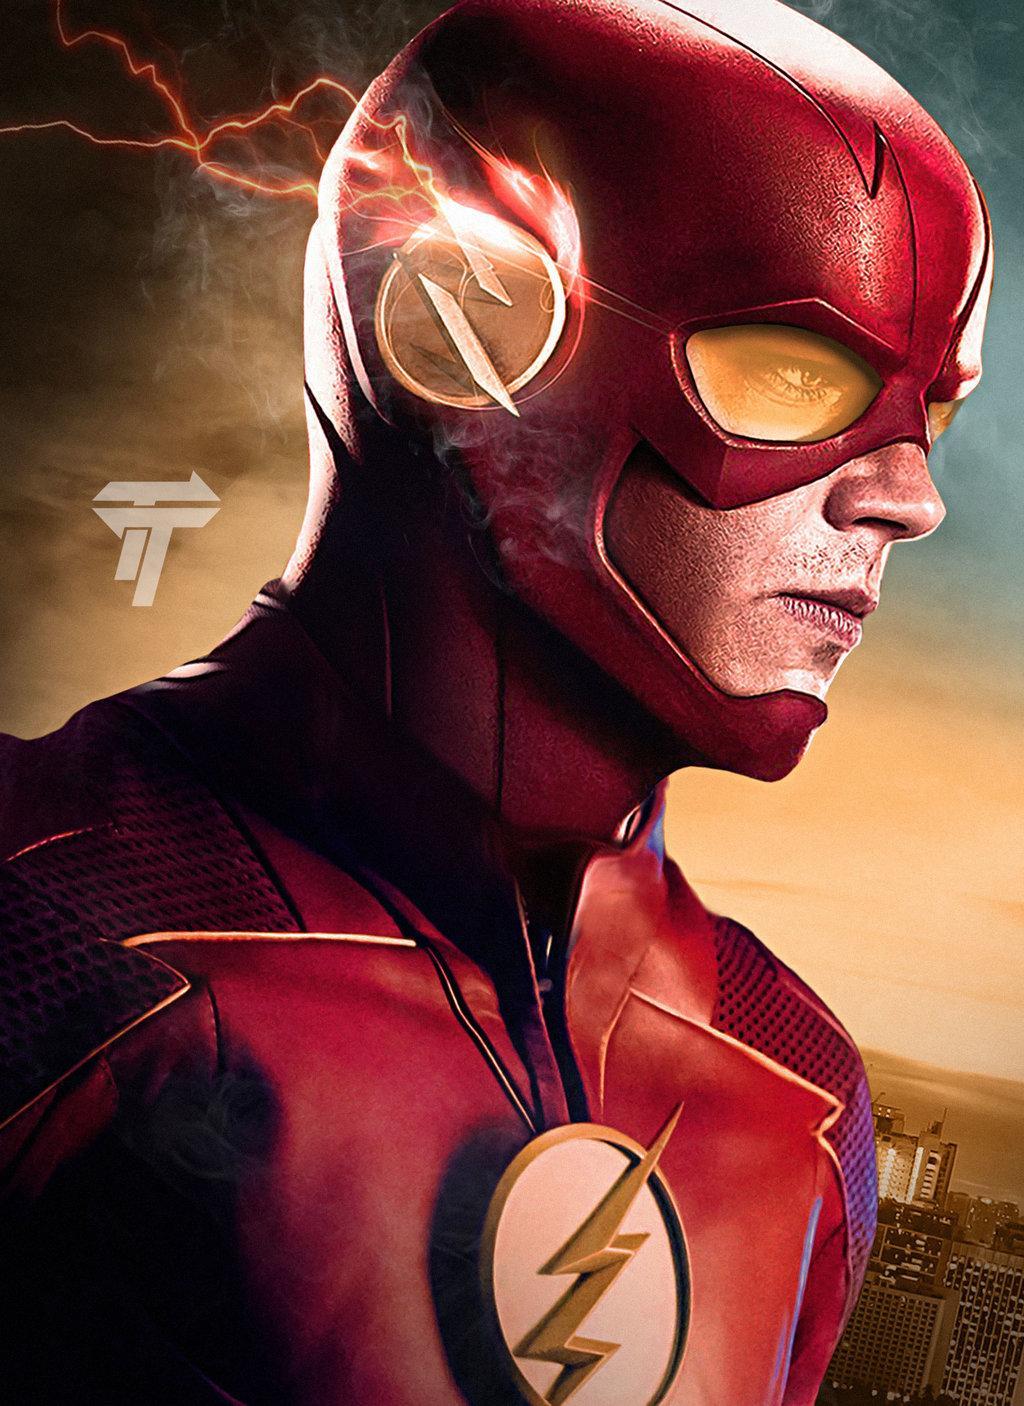 The Flash Season 4 Wallpapers - Top Free The Flash Season 4 Backgrounds ...